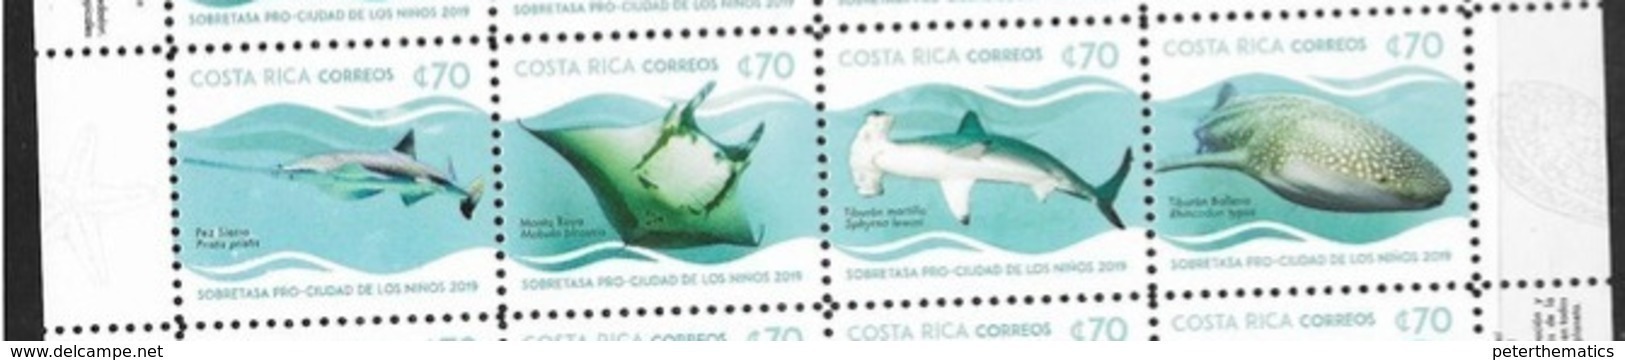 COSTA RICA, 2019, MNH, CHILDREN'S WELFARE ,MARINE LIFE, SHARKS, HAMMERHEAD SHARKS, WHALE SHARKS,  STINGRAYS, SAWFISH,4v - Poissons